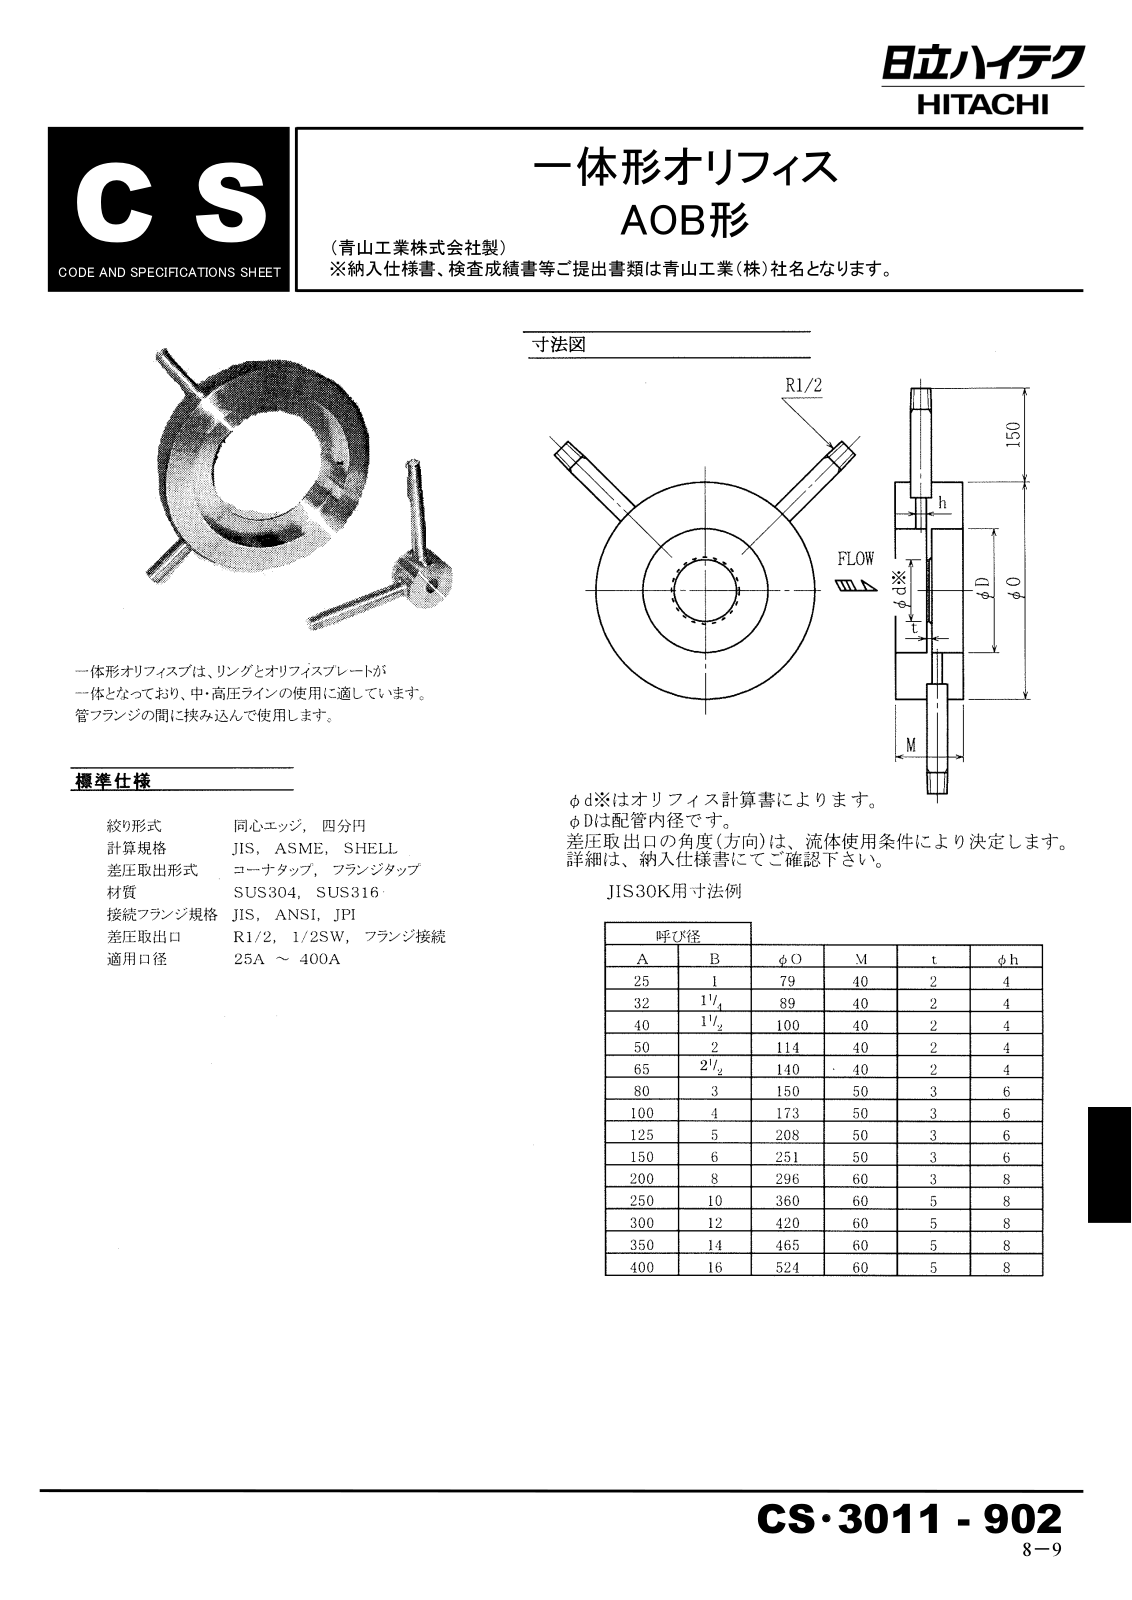 HITACHI AOB User Manual